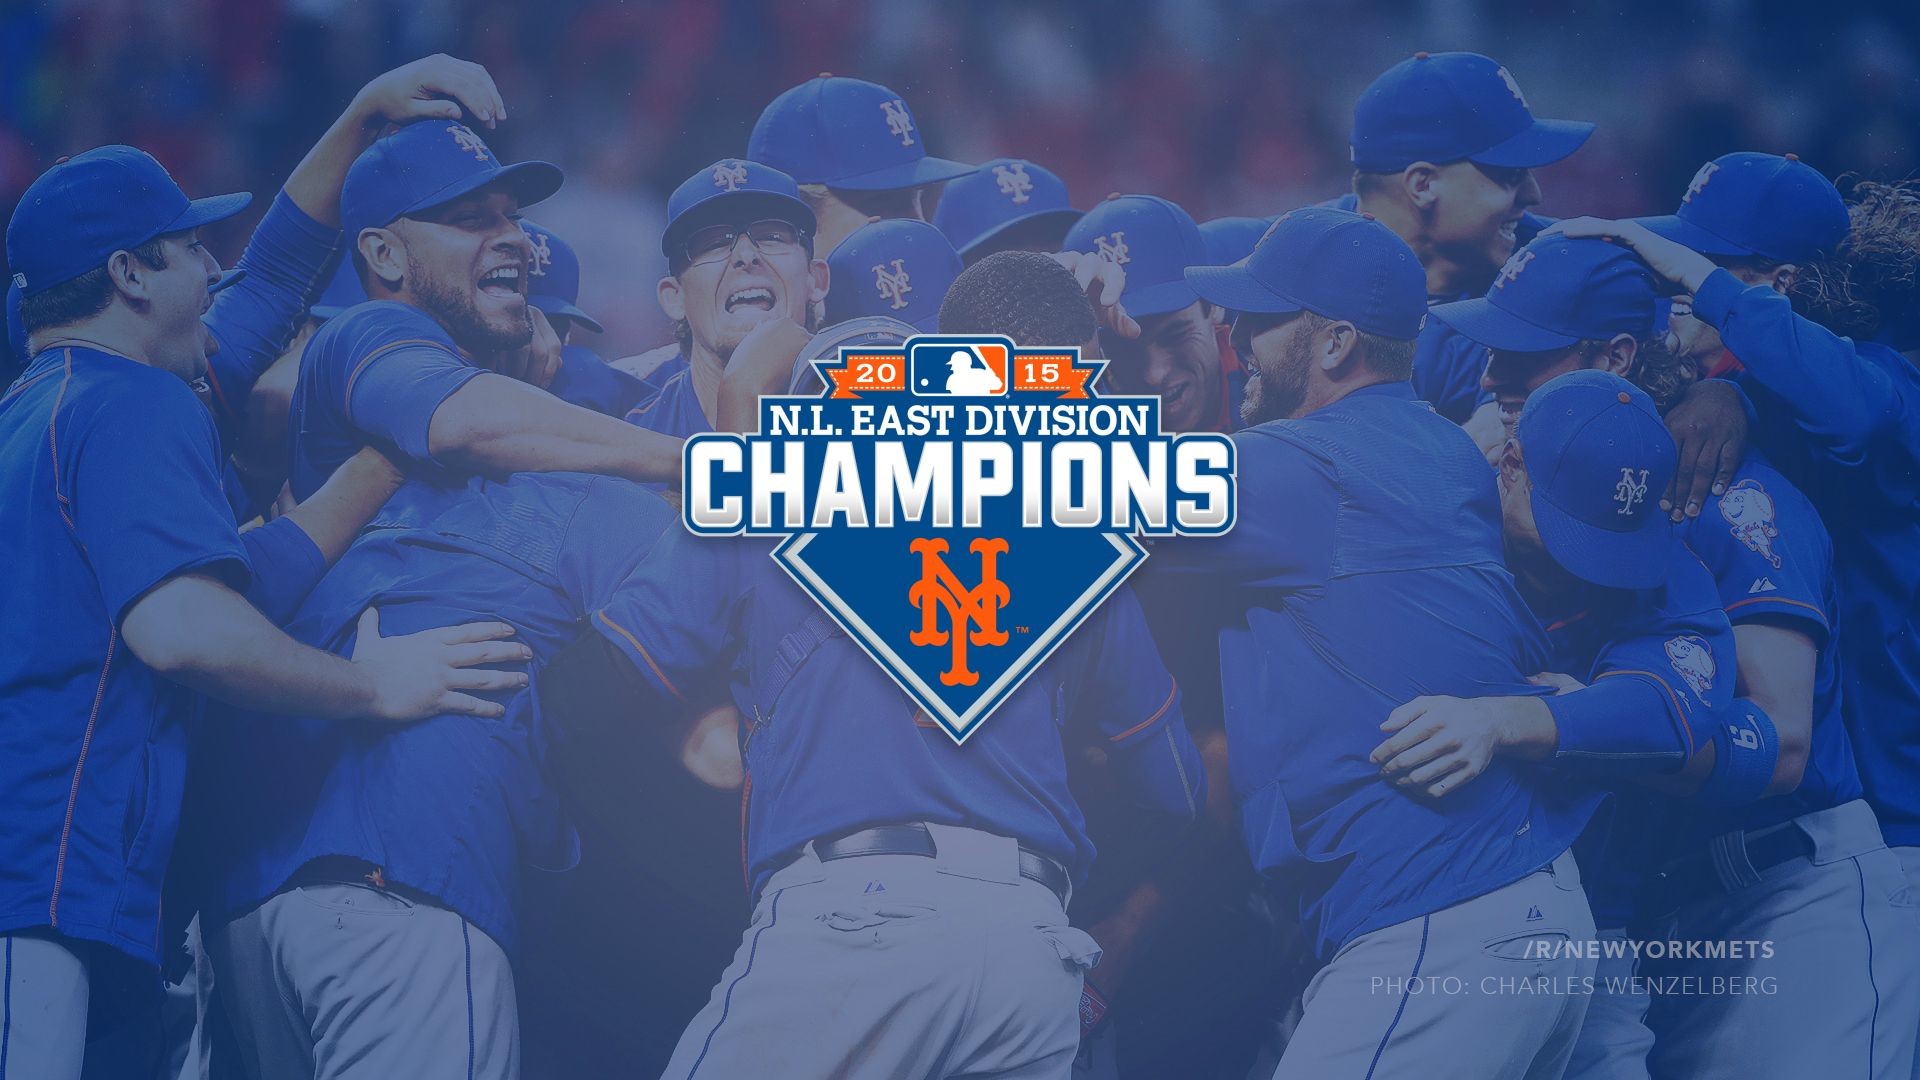 1920x1080 ImageNew York Mets - 2015 NL East Champs Wallpaper ...